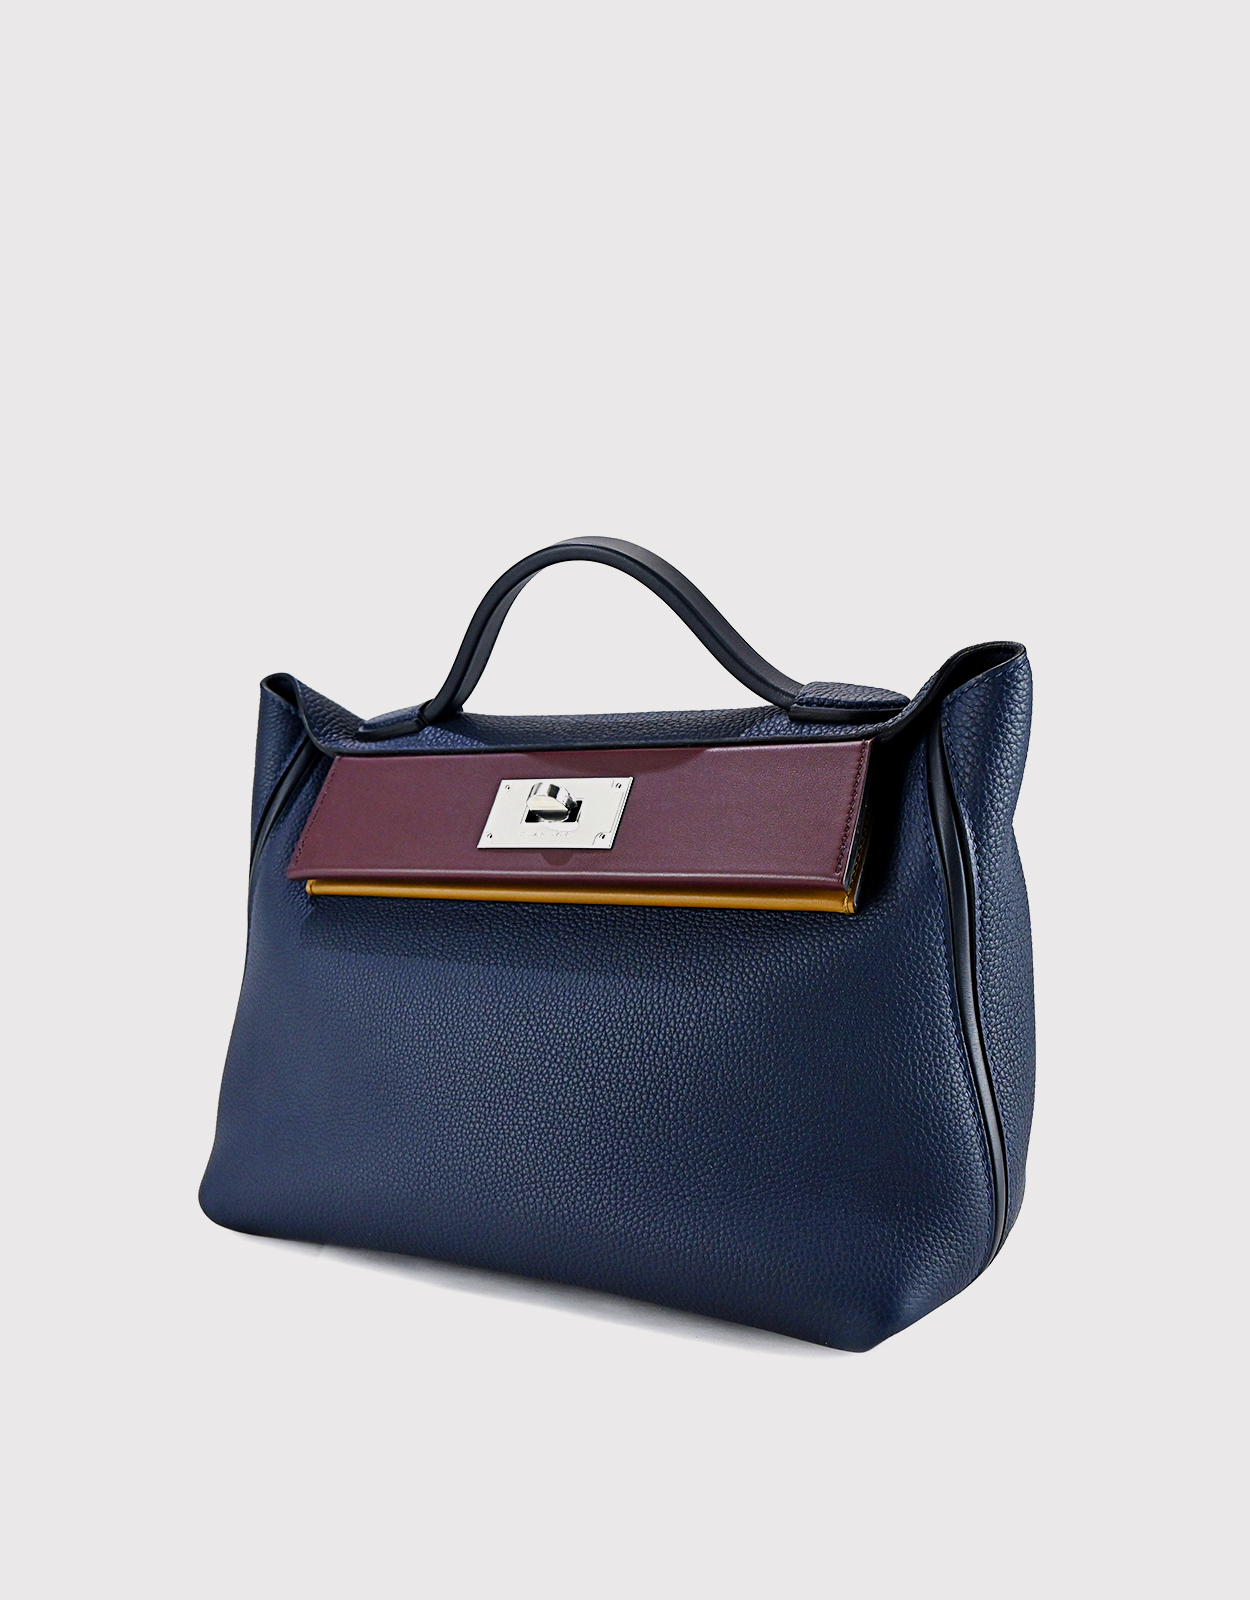 Hermès 2020 24/24 35cm Clemence and Swift Leather Handbag